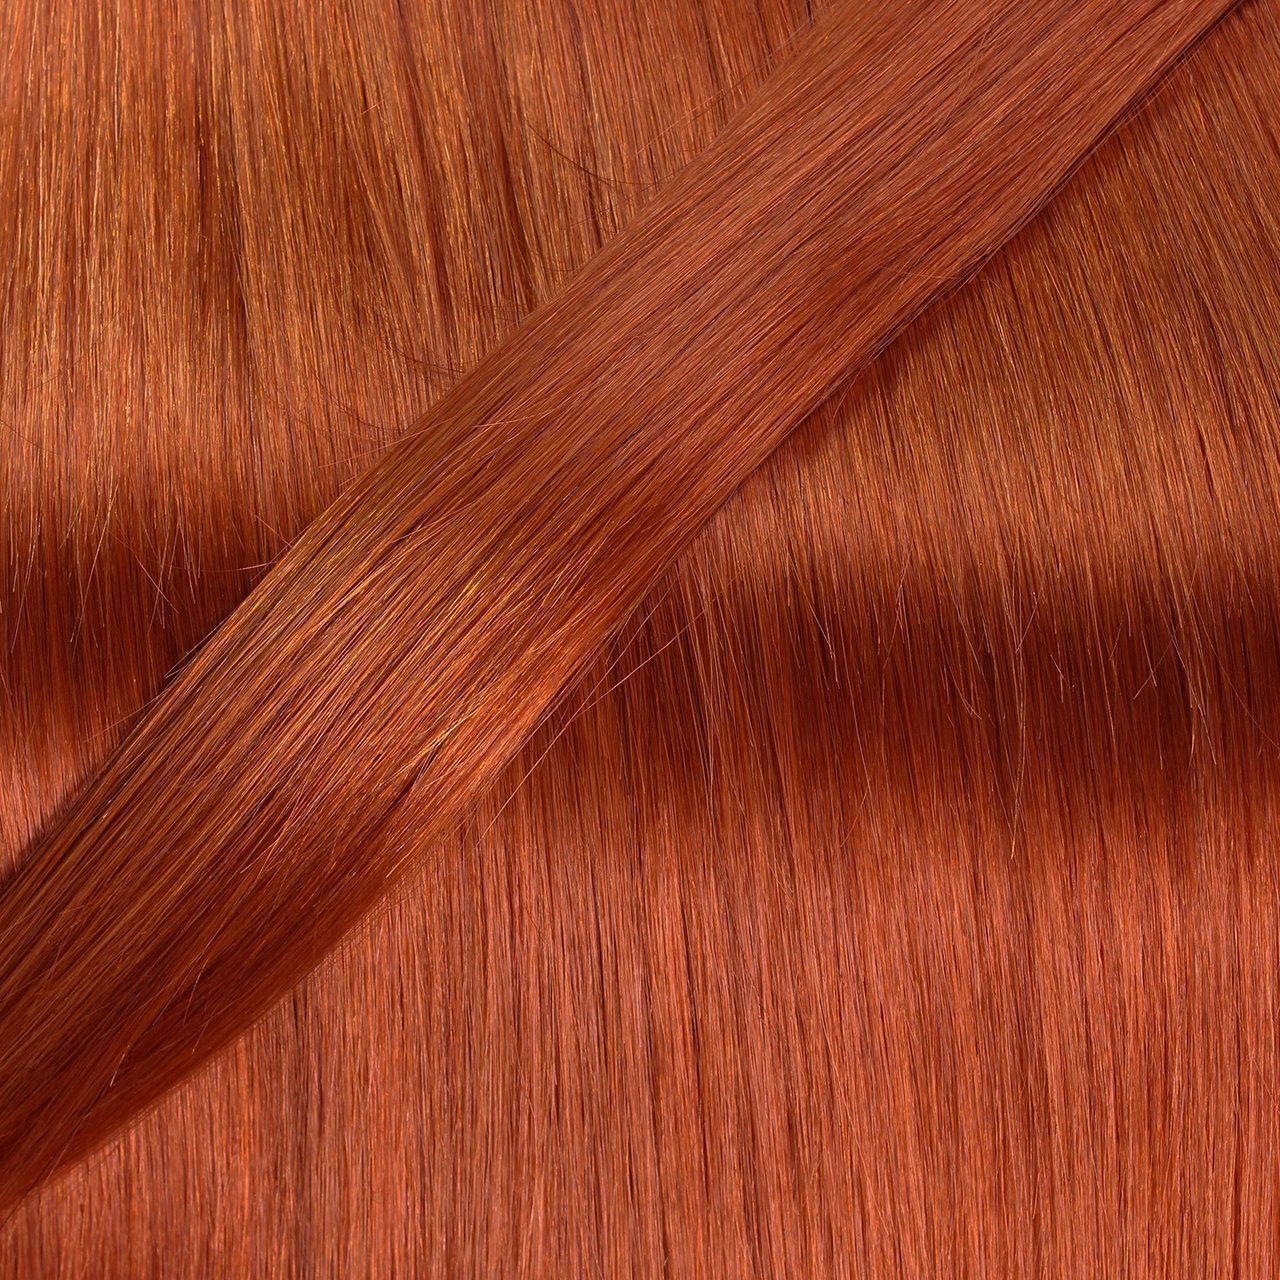 50cm glatt - Rot-Gold Microring 0.5g Hellblond hair2heart Echthaar-Extension #8/43 Loops